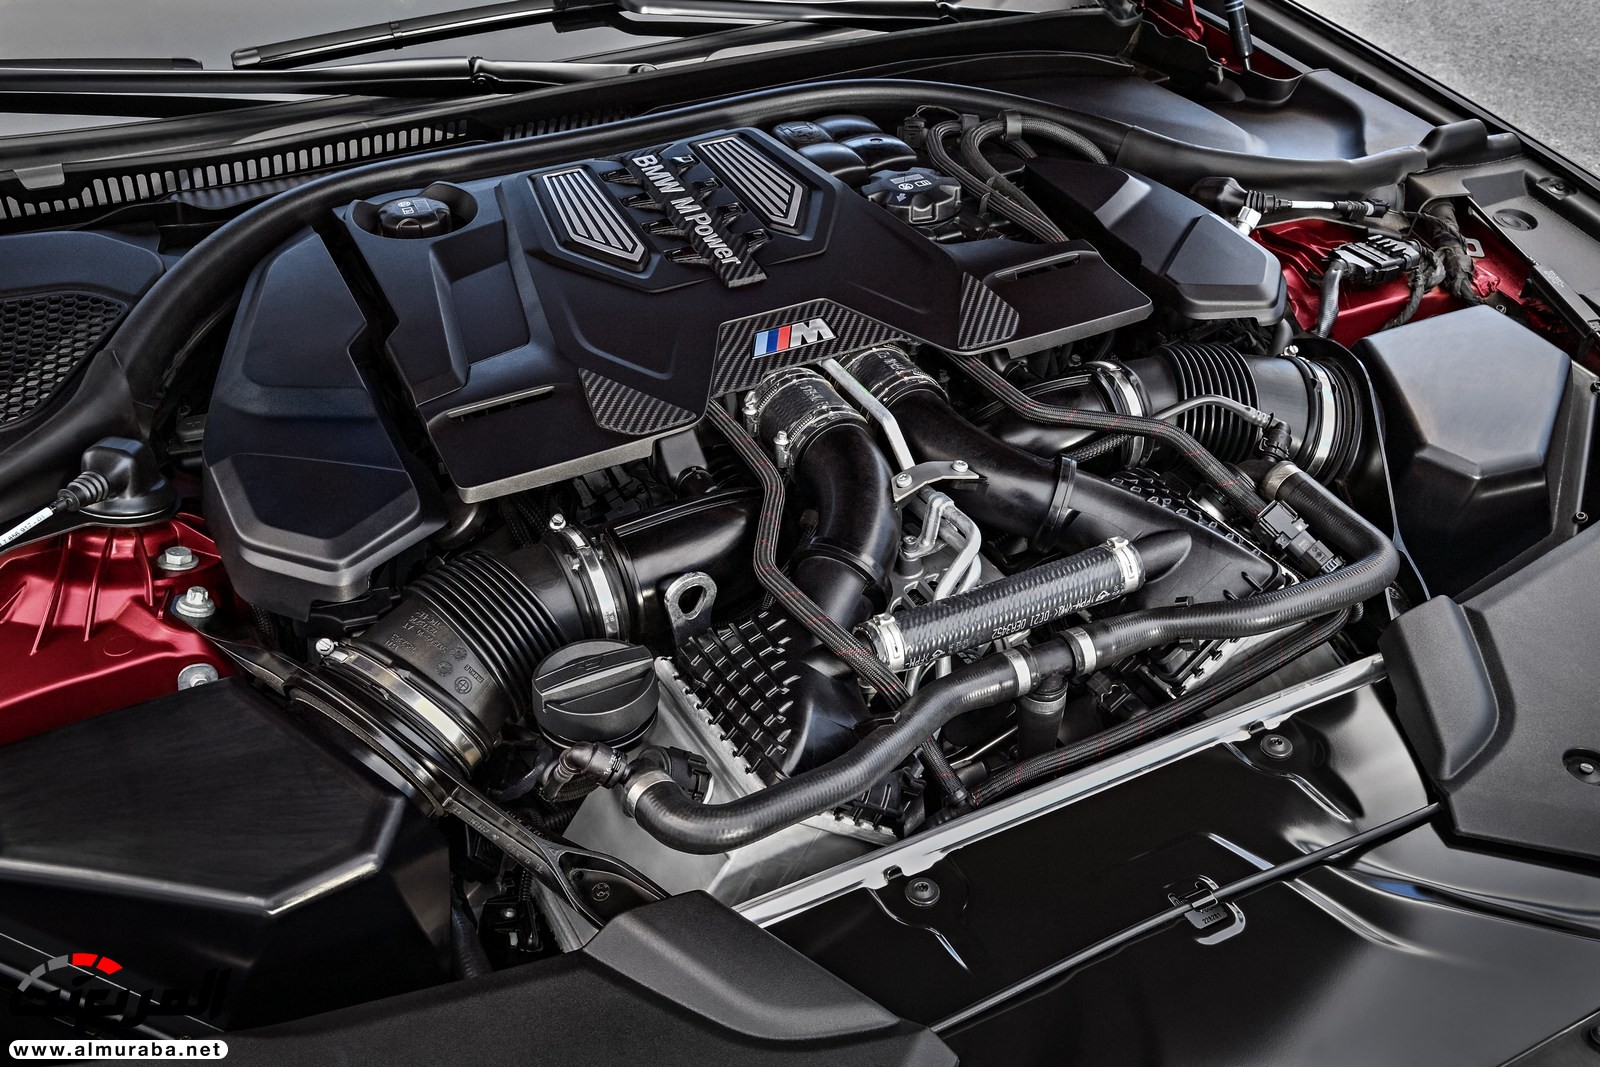 بي ام دبليو M5 2018 تكشف نفسها رسمياً بقوة ٦٠٠ حصان "صور ومواصفات" BMW 187